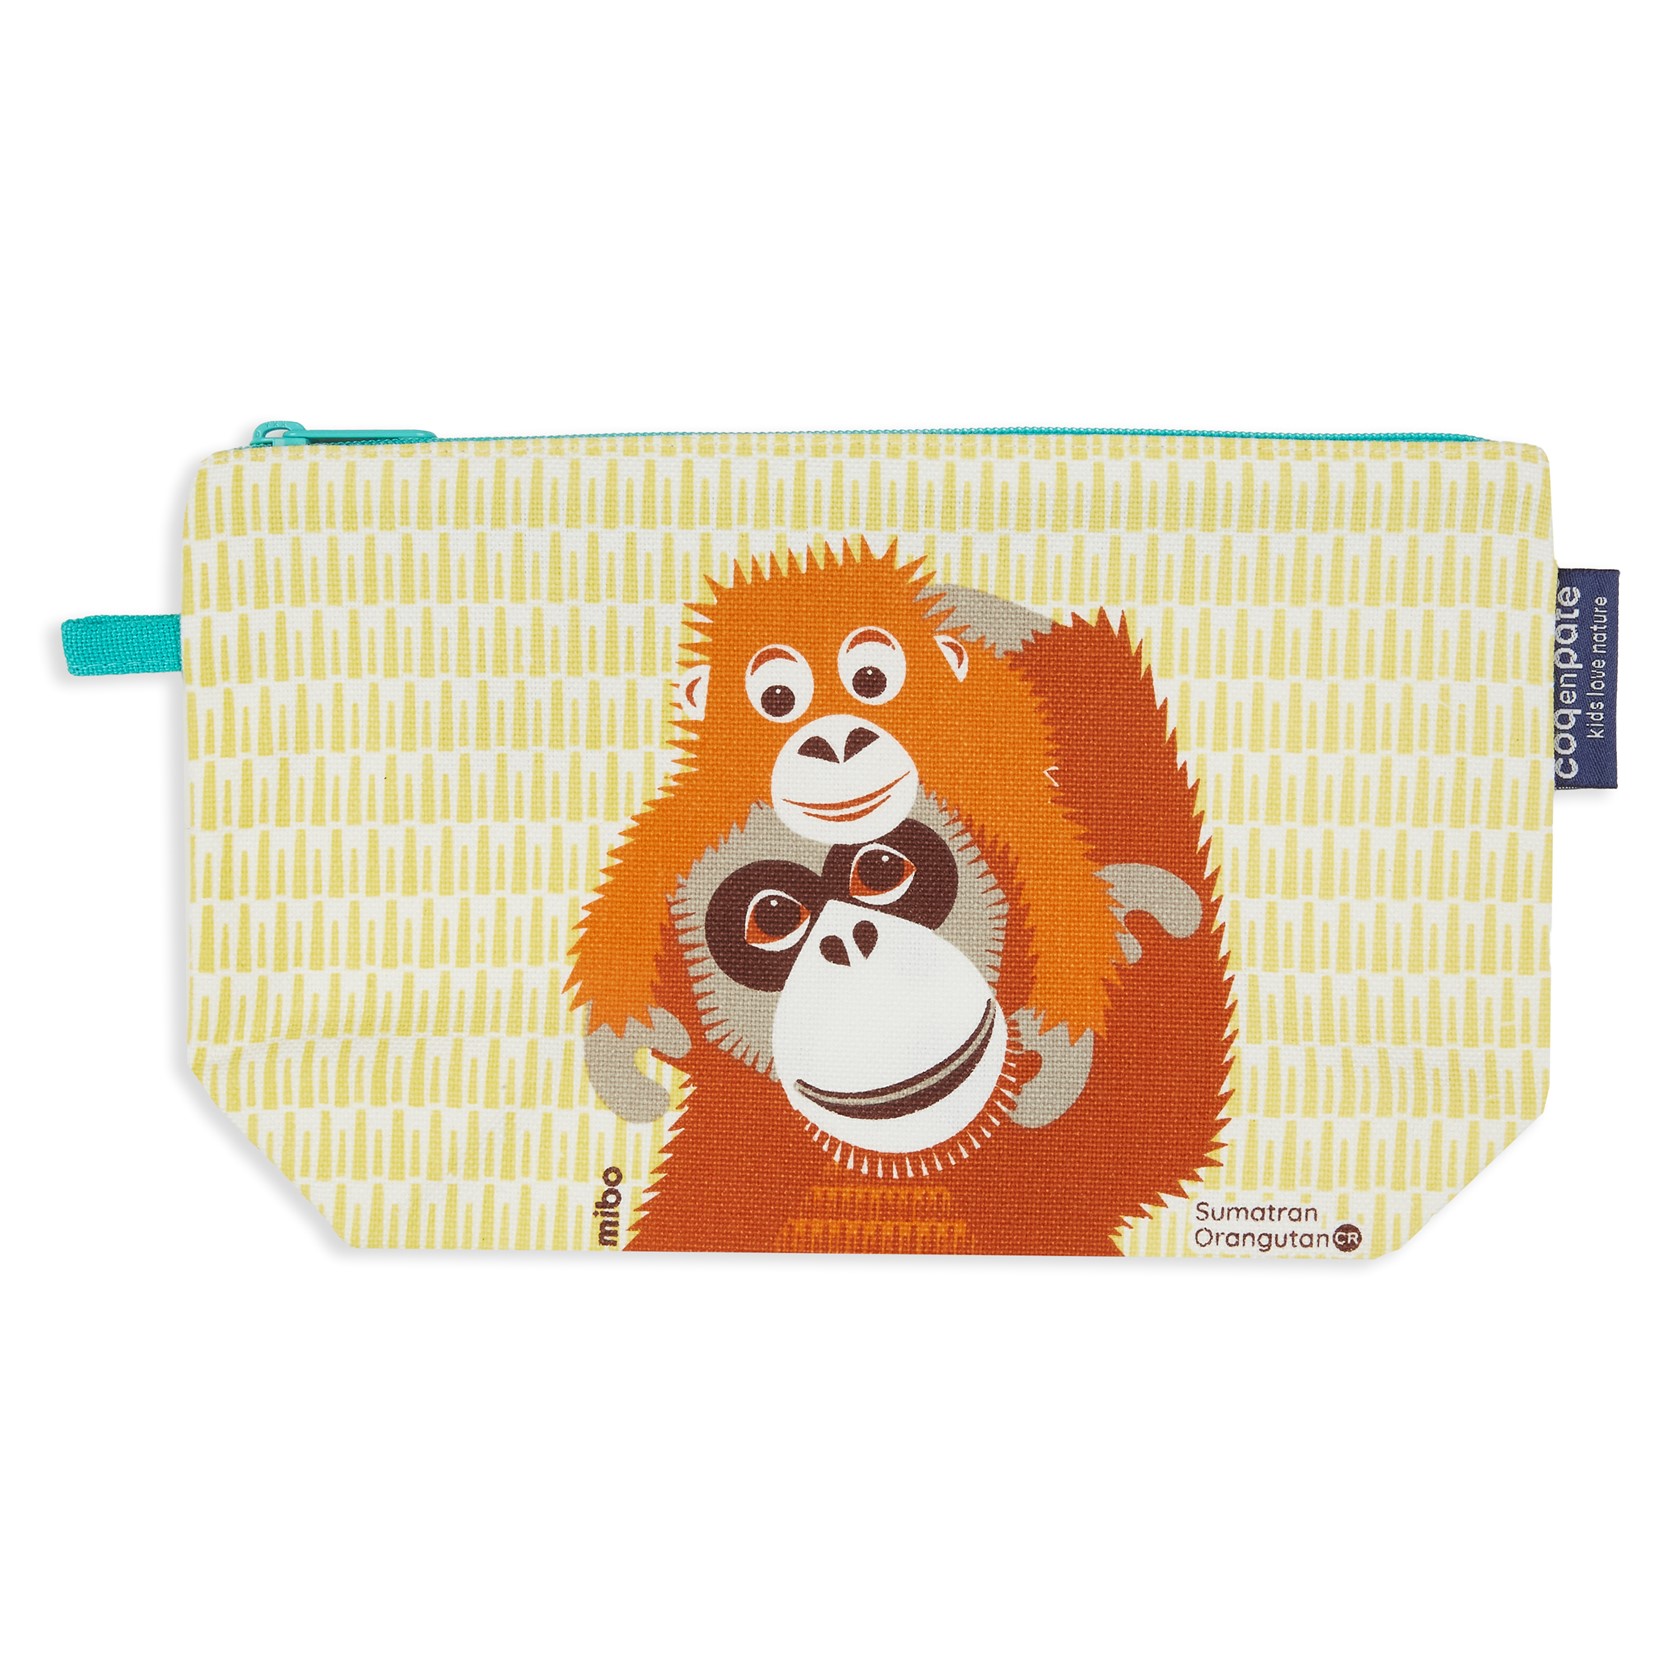 Coq en Pate Orangutan Pencil Case